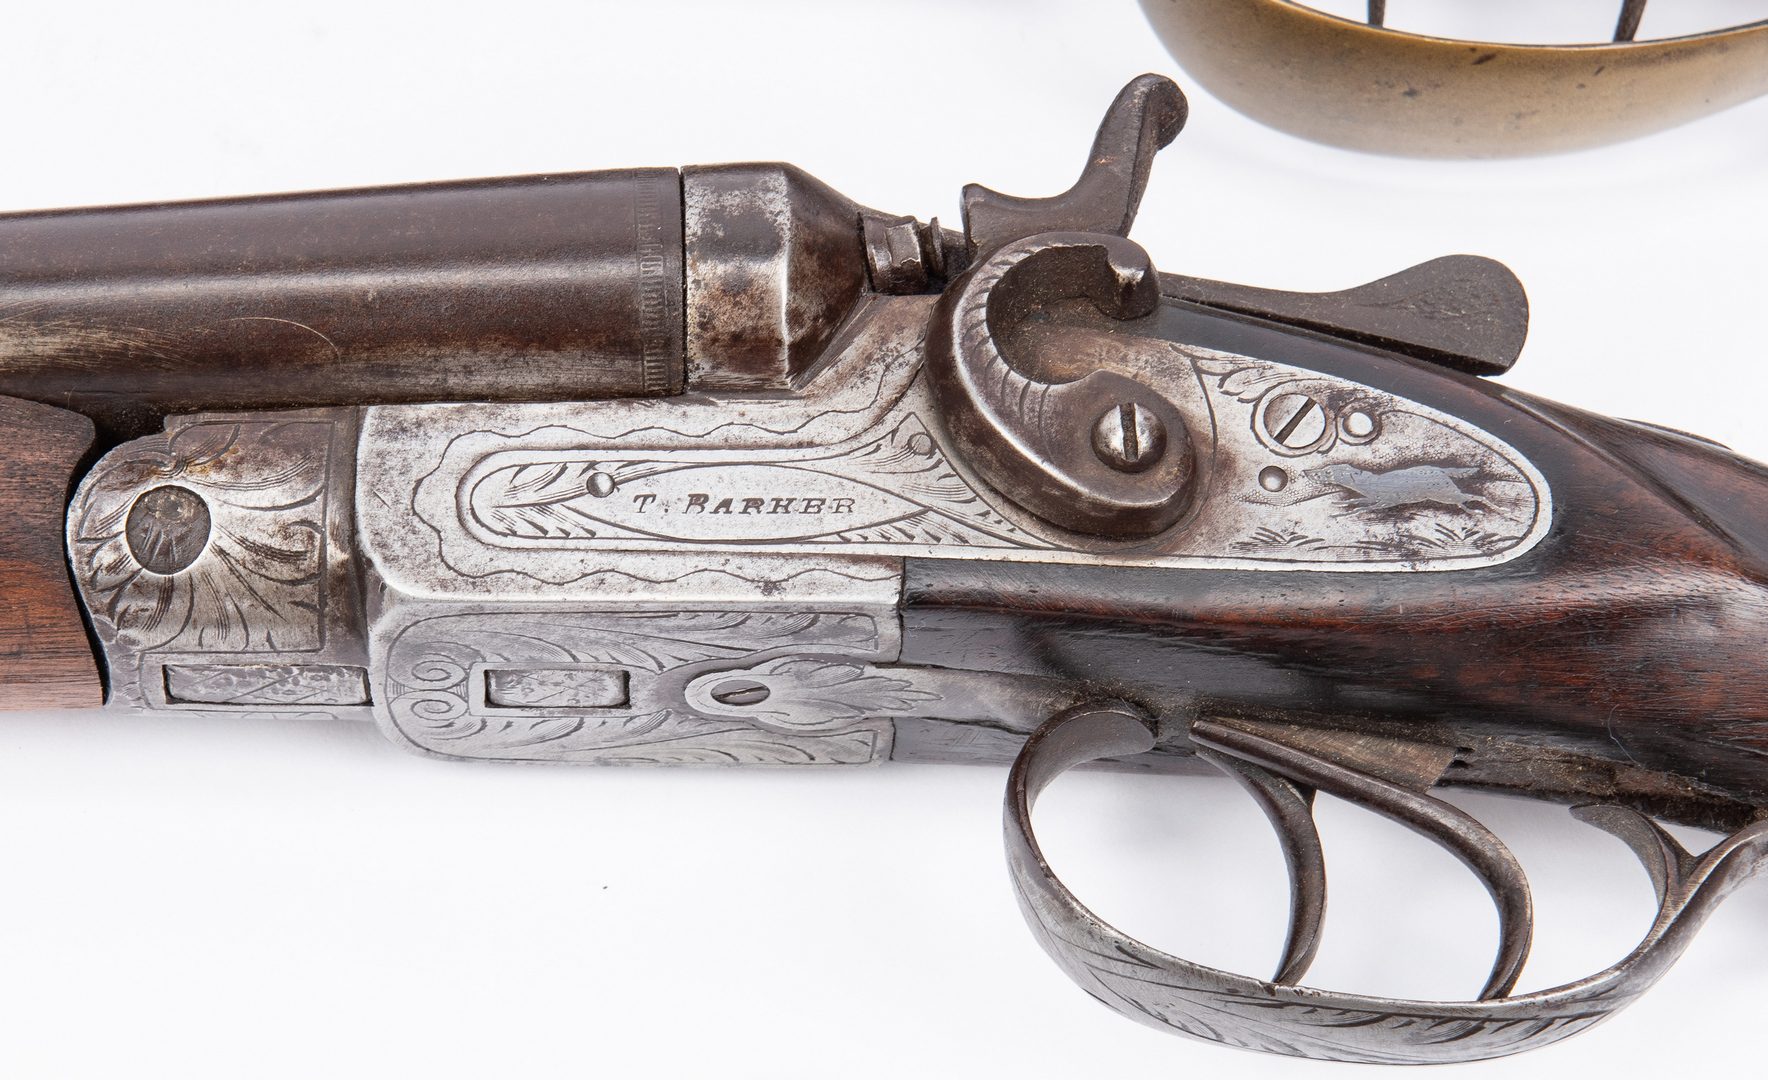 Lot 184: 2 19th Cent. Firearms, 1 WWI era German Machete, 3 items